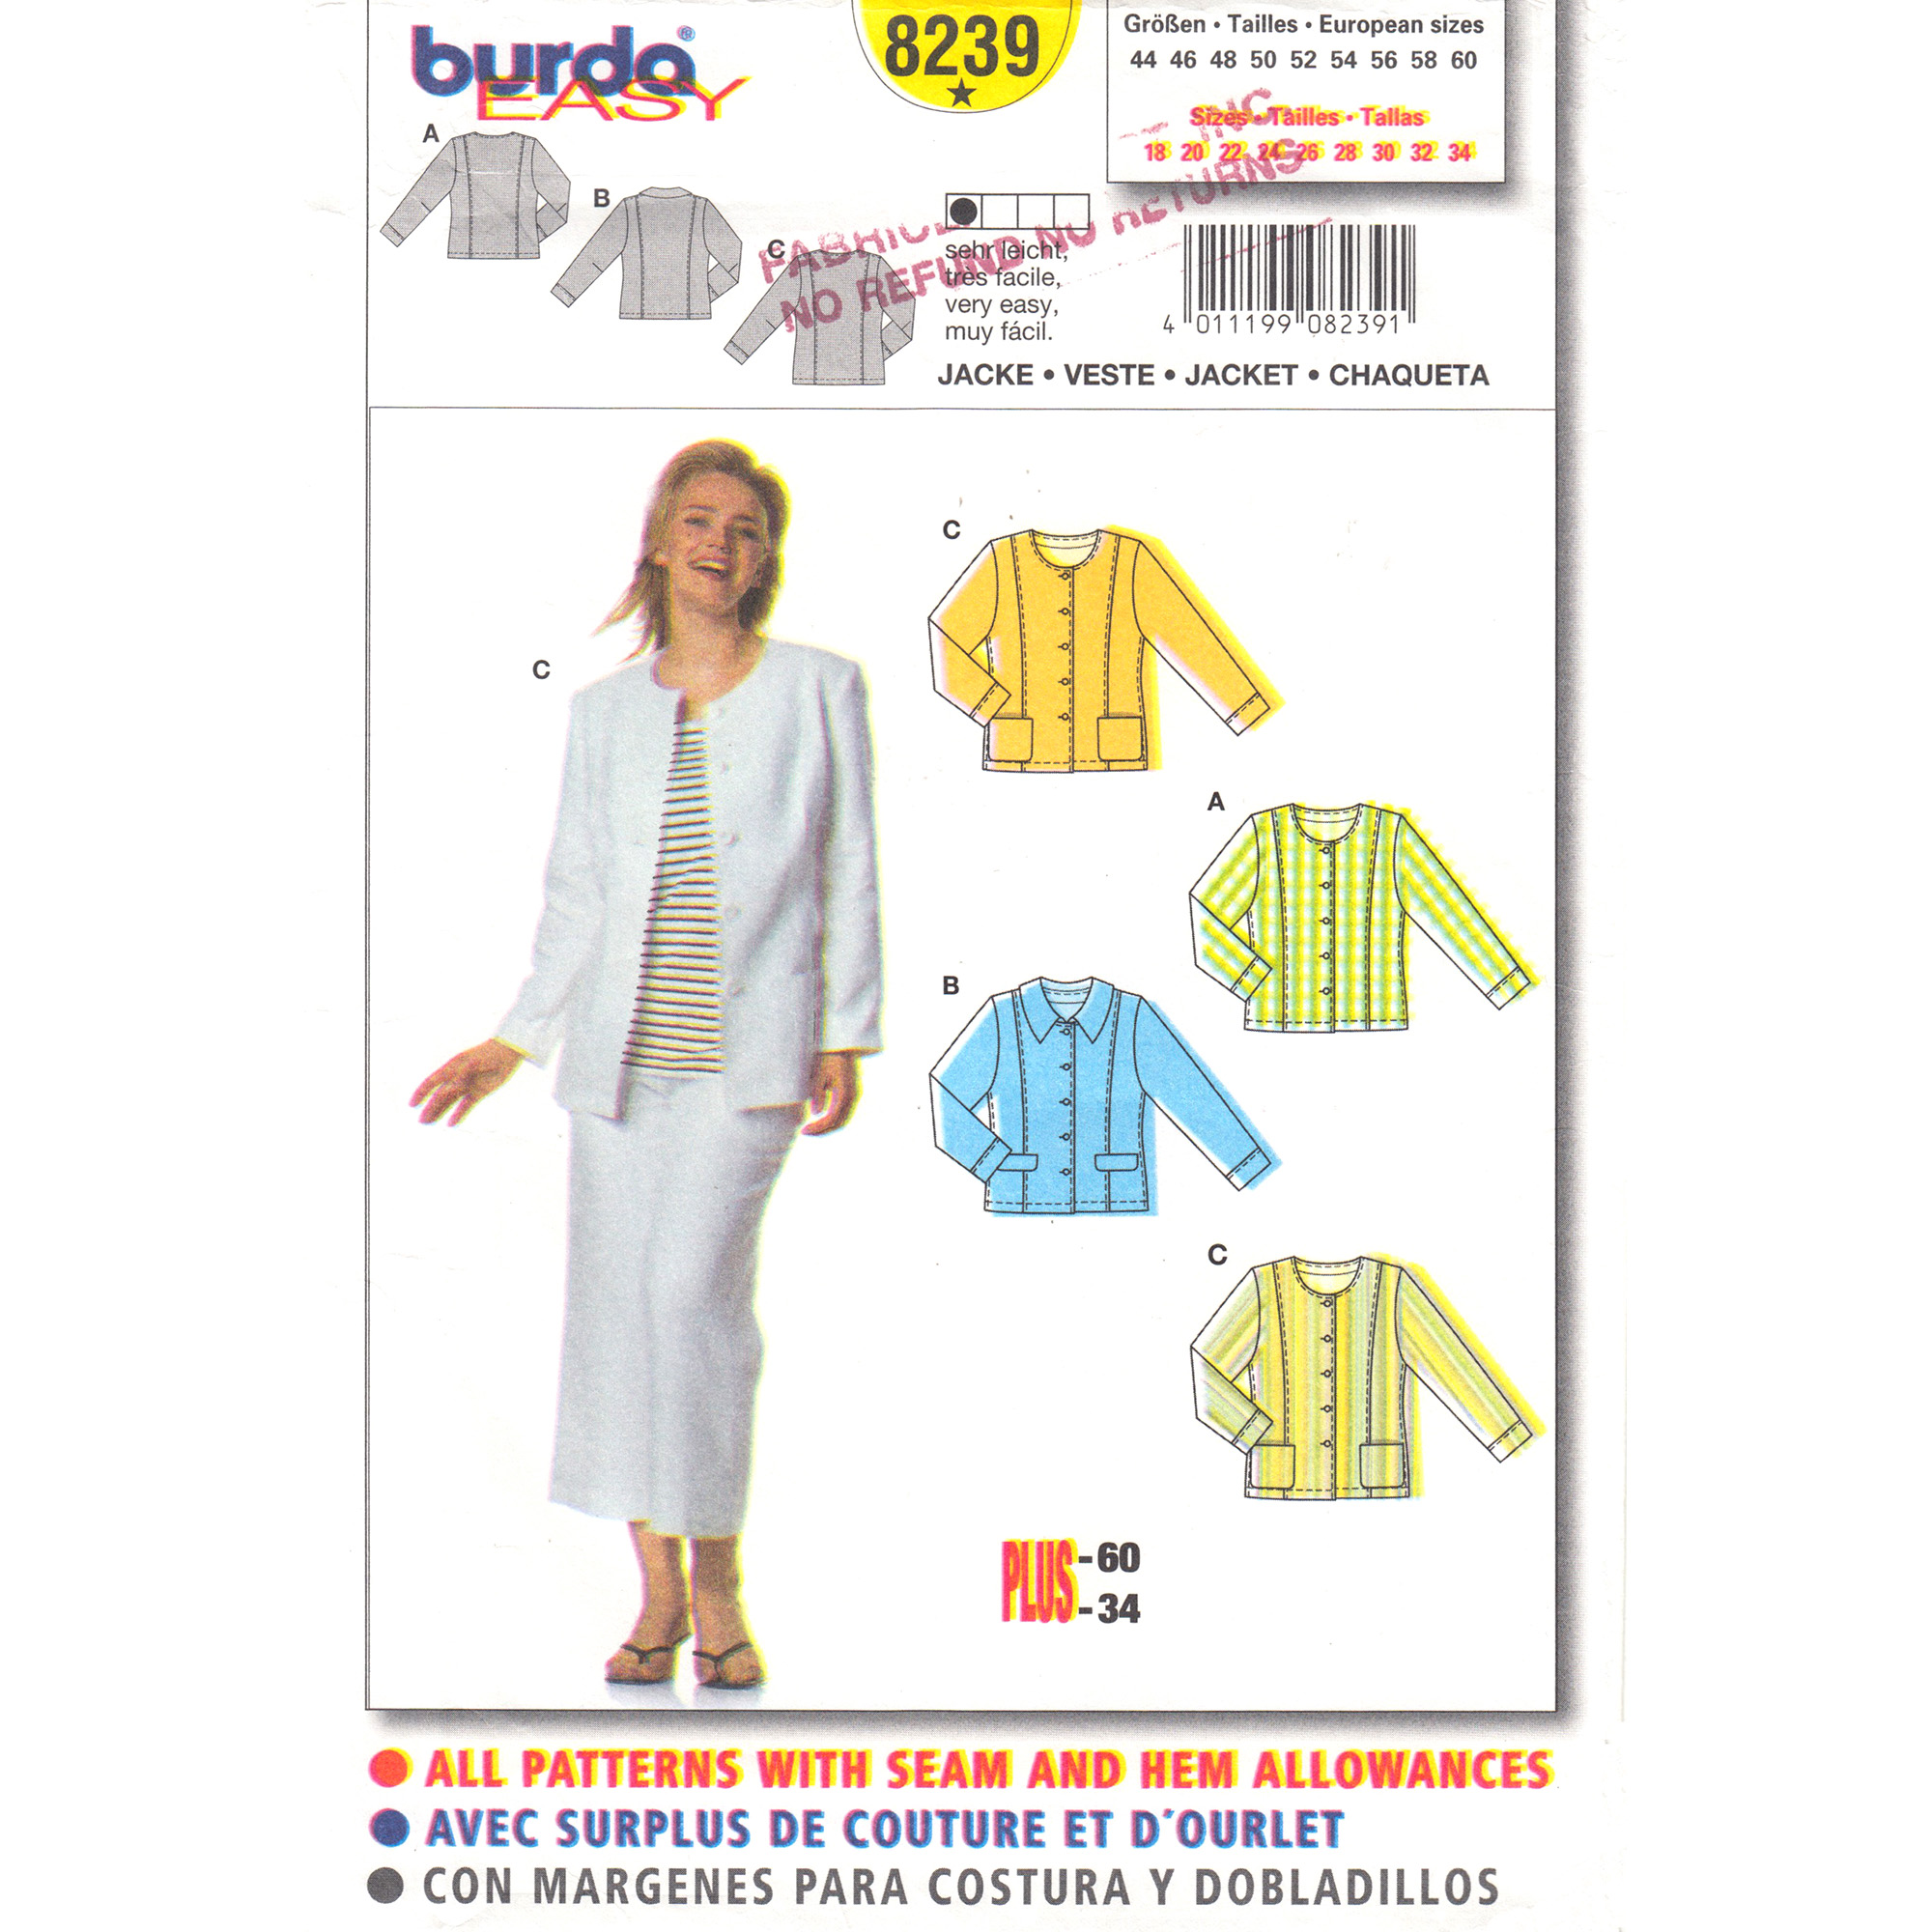 Burda 8239 jacket pattern